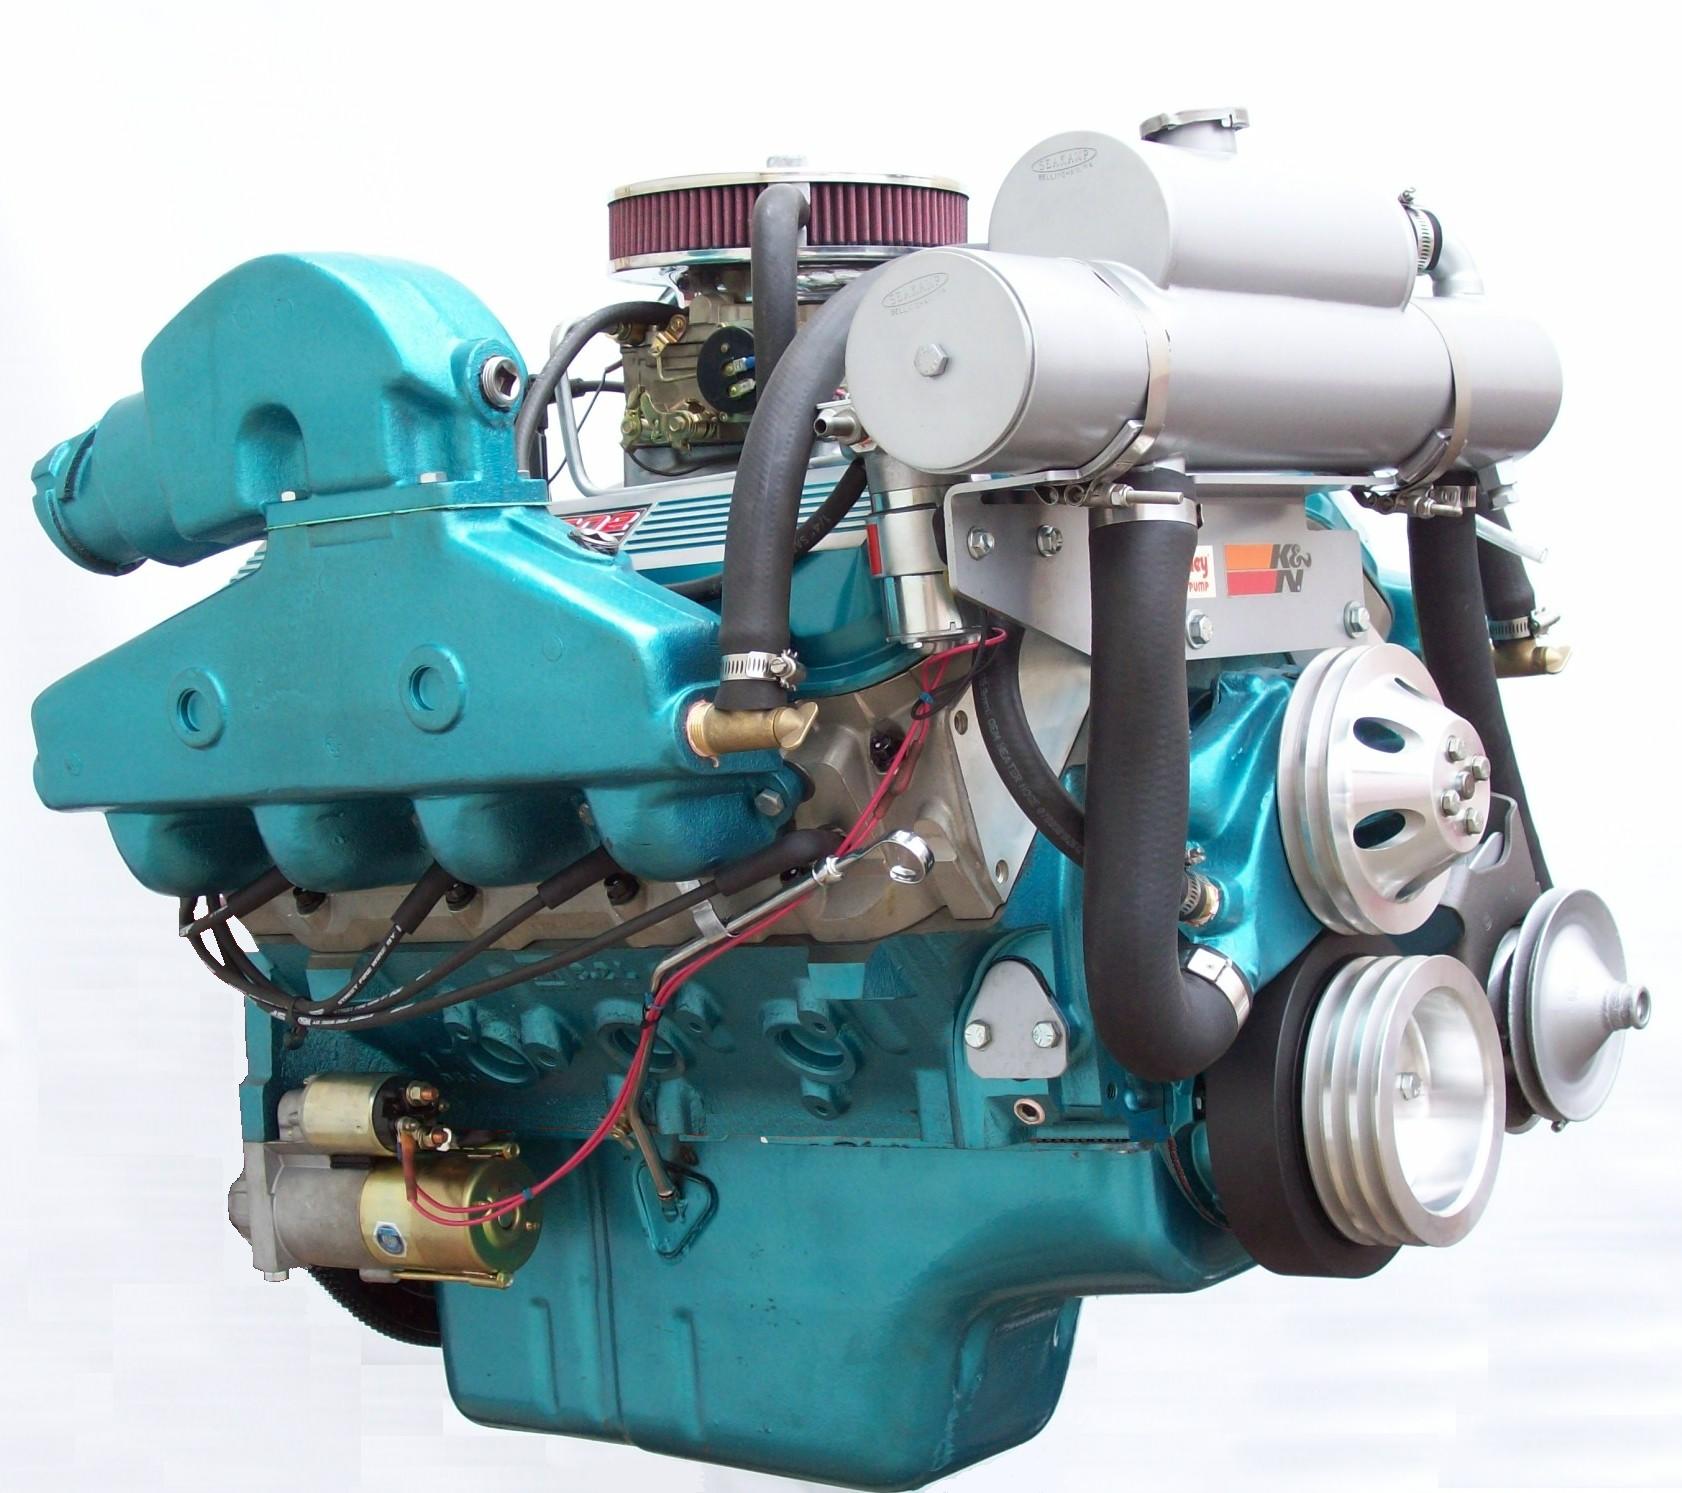 Chrysler 318 marine engine fuel system #2